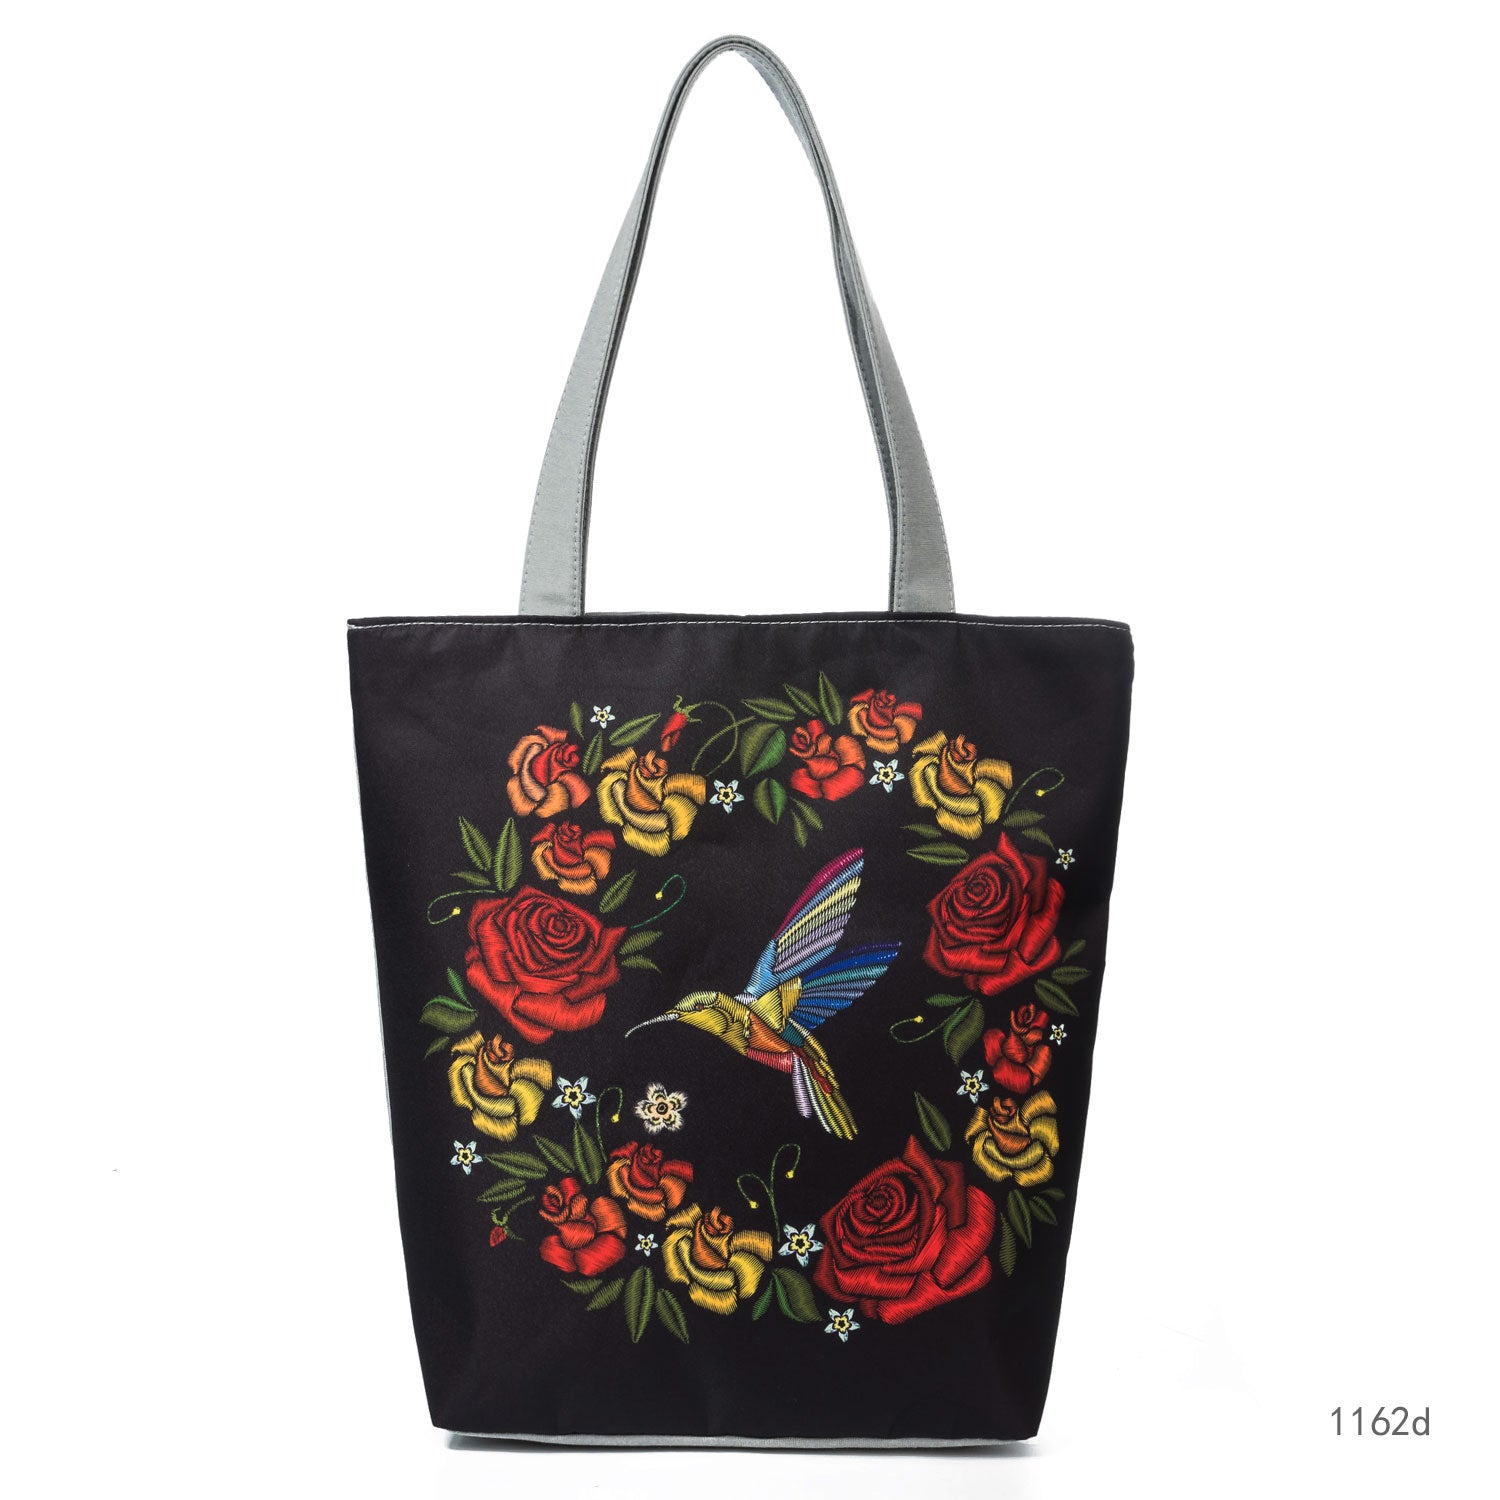 Miyahouse الأزهار المطبوعة حقيبة يد المرأة حقيبة كتف قماش الصيف حقيبة شاطئية الاستخدام اليومي الإناث حقيبة تسوق سيدة